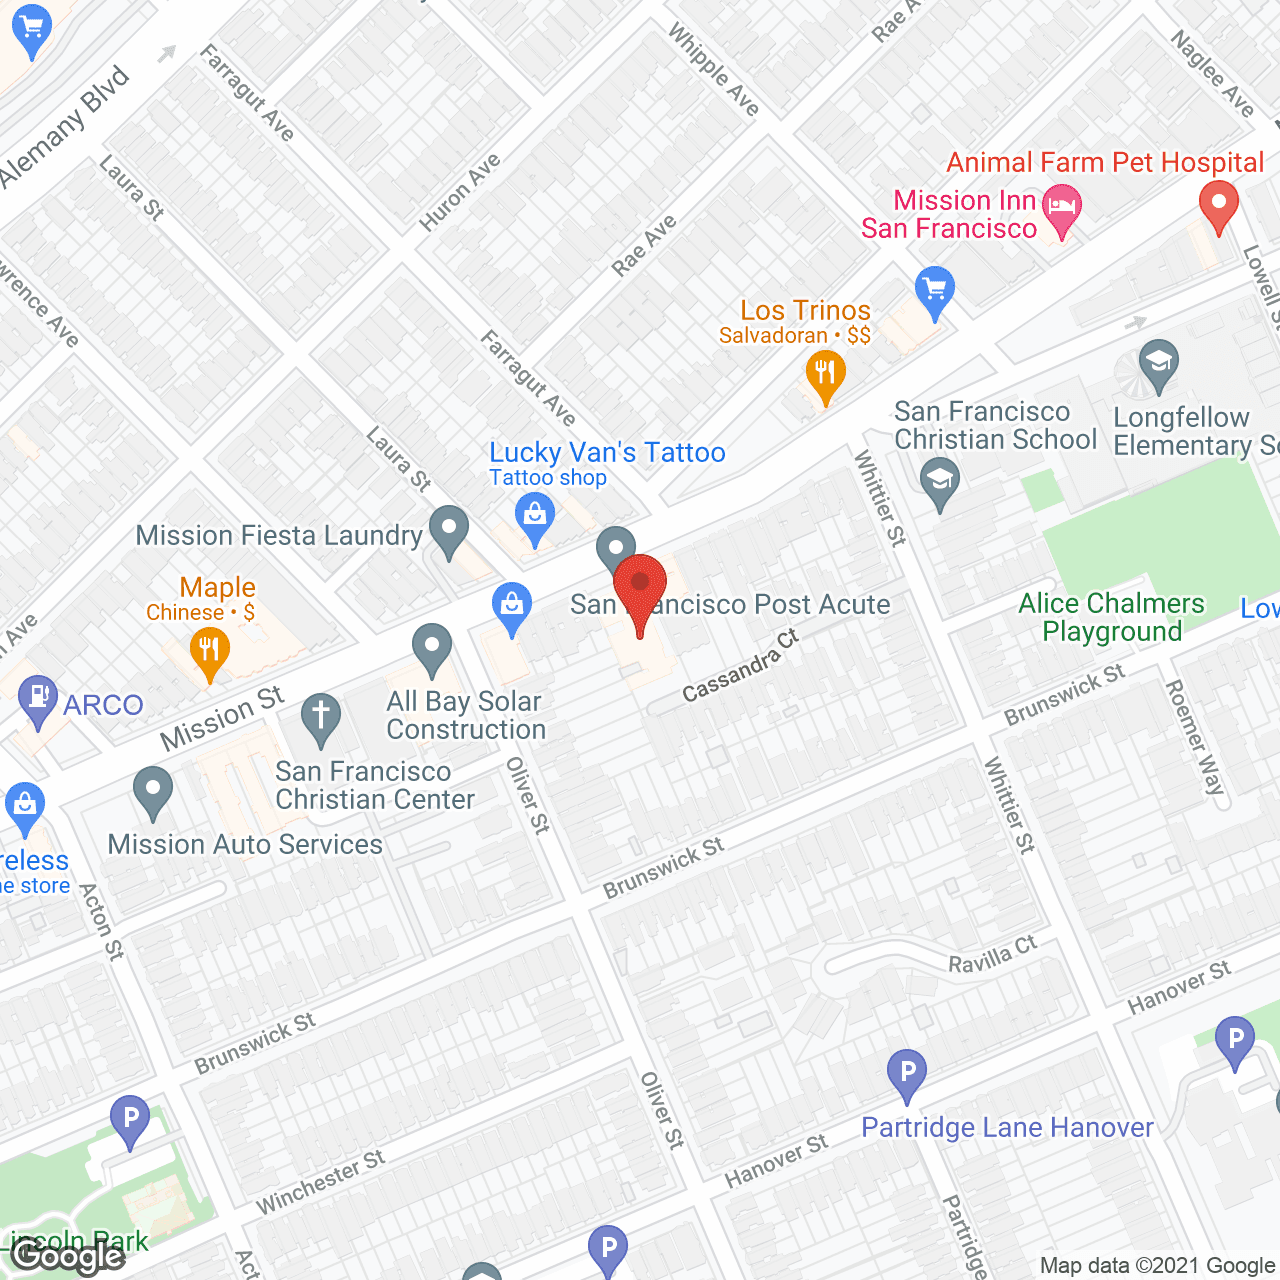 San Francisco Post Acute in google map